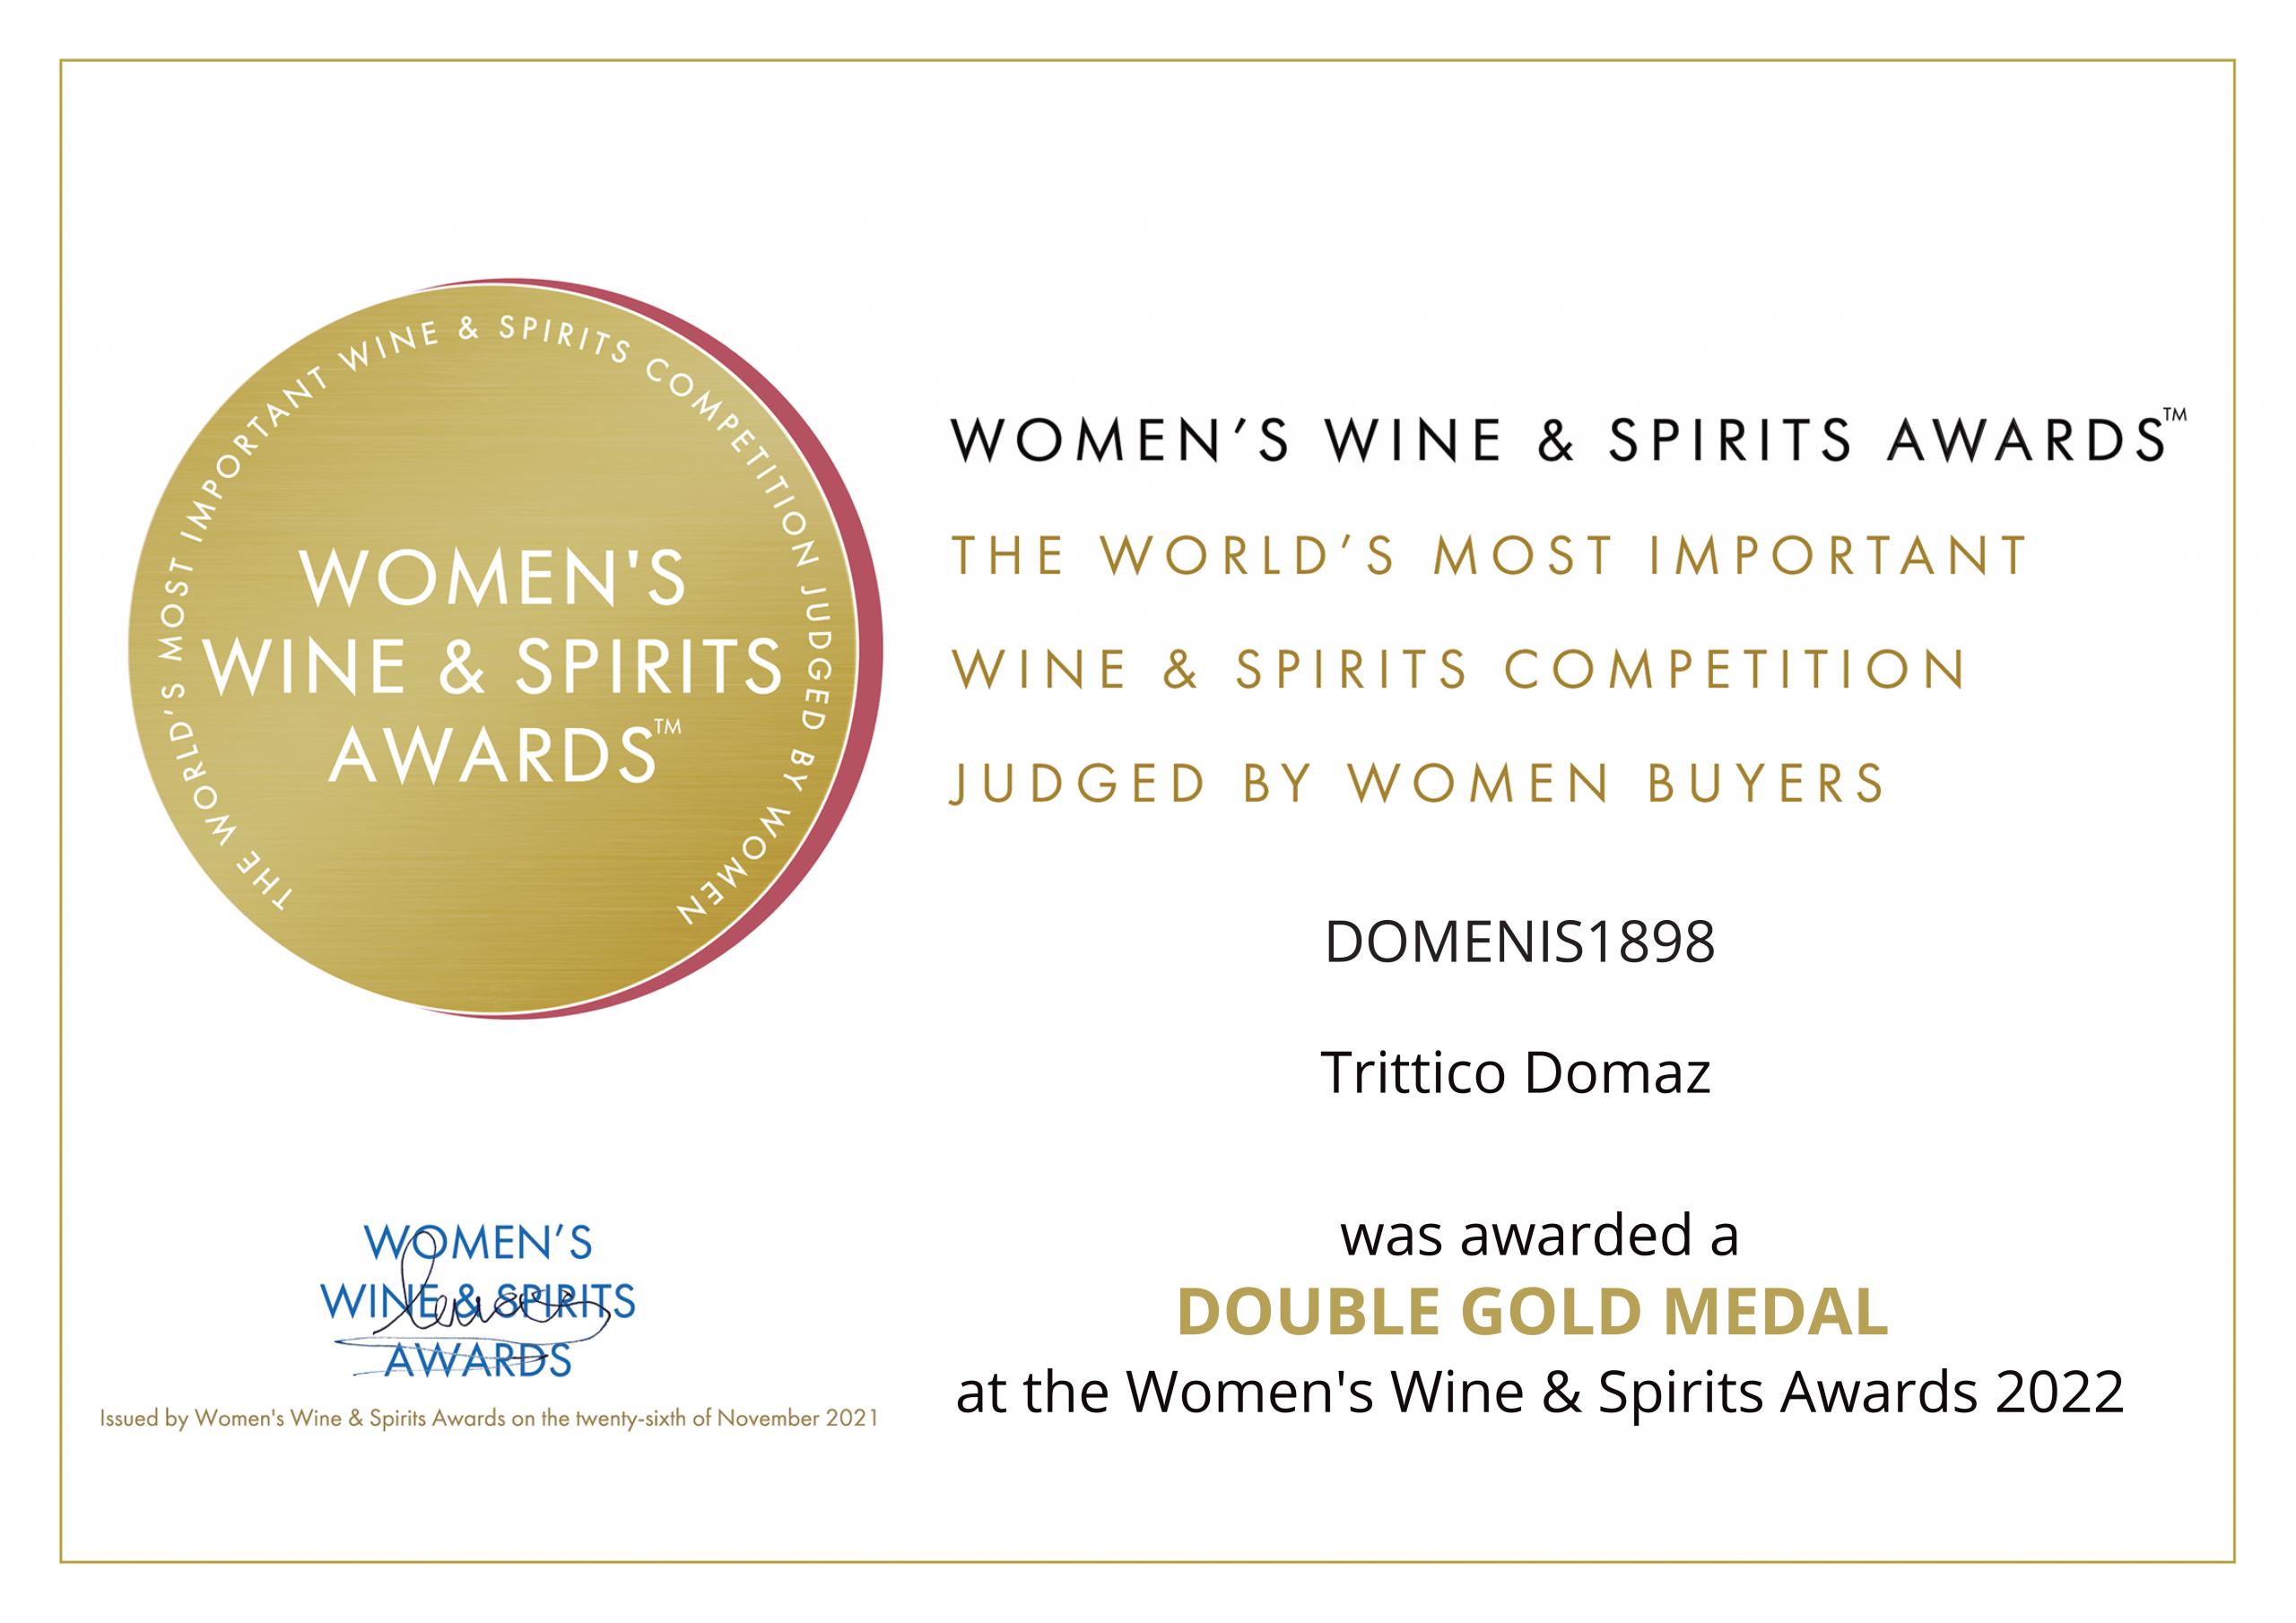 Women’s Wine & Spirit Awards 2022 – Double Gold Medal – Trittico Domaz